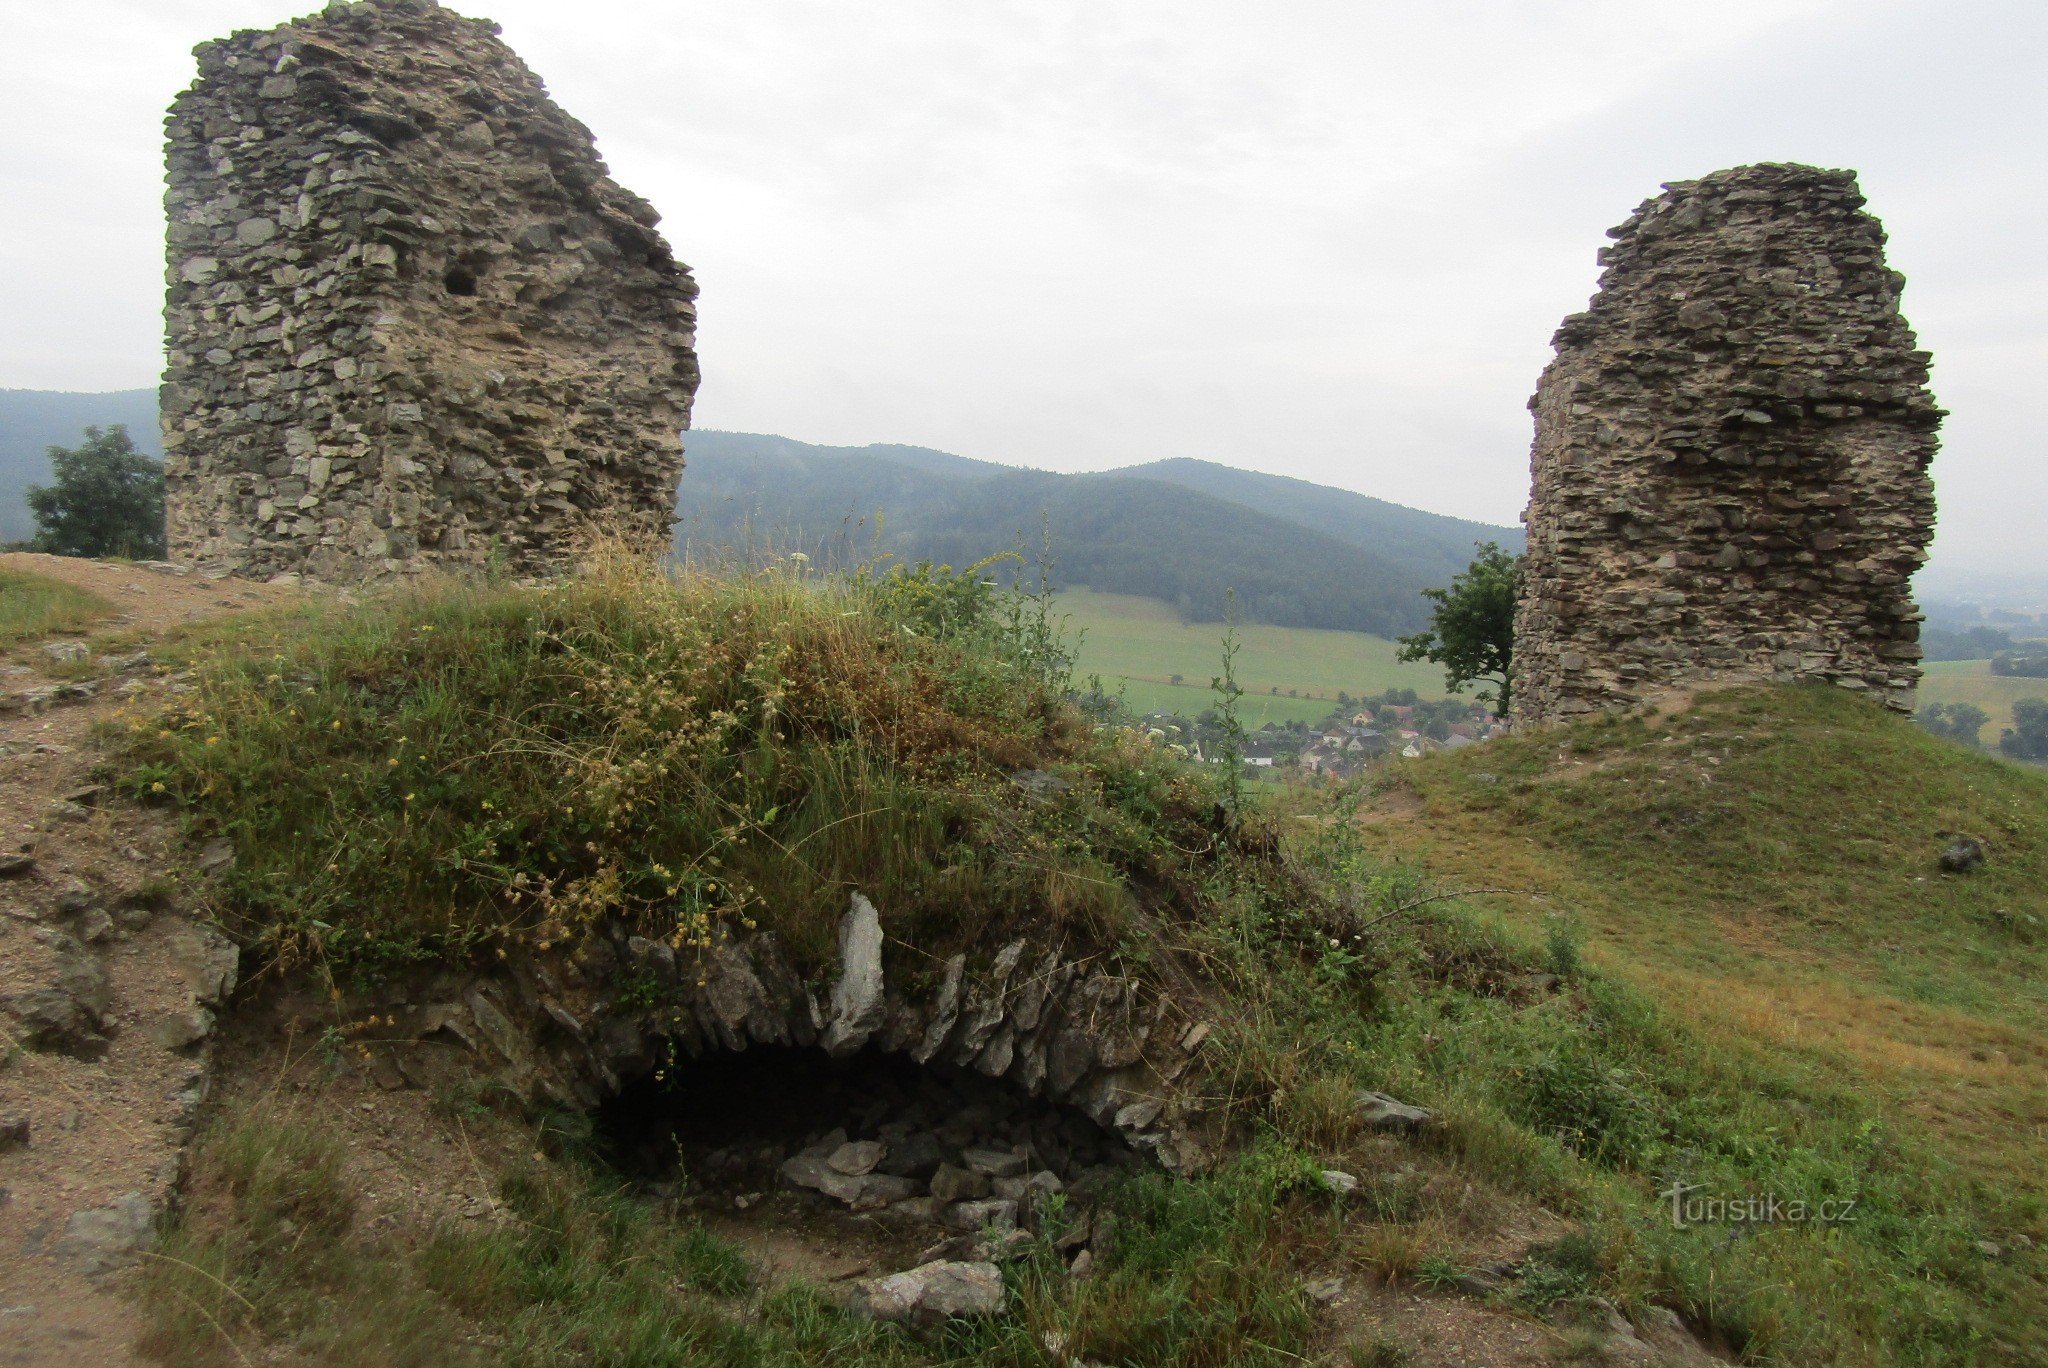 The ruins of Brníčko Castle